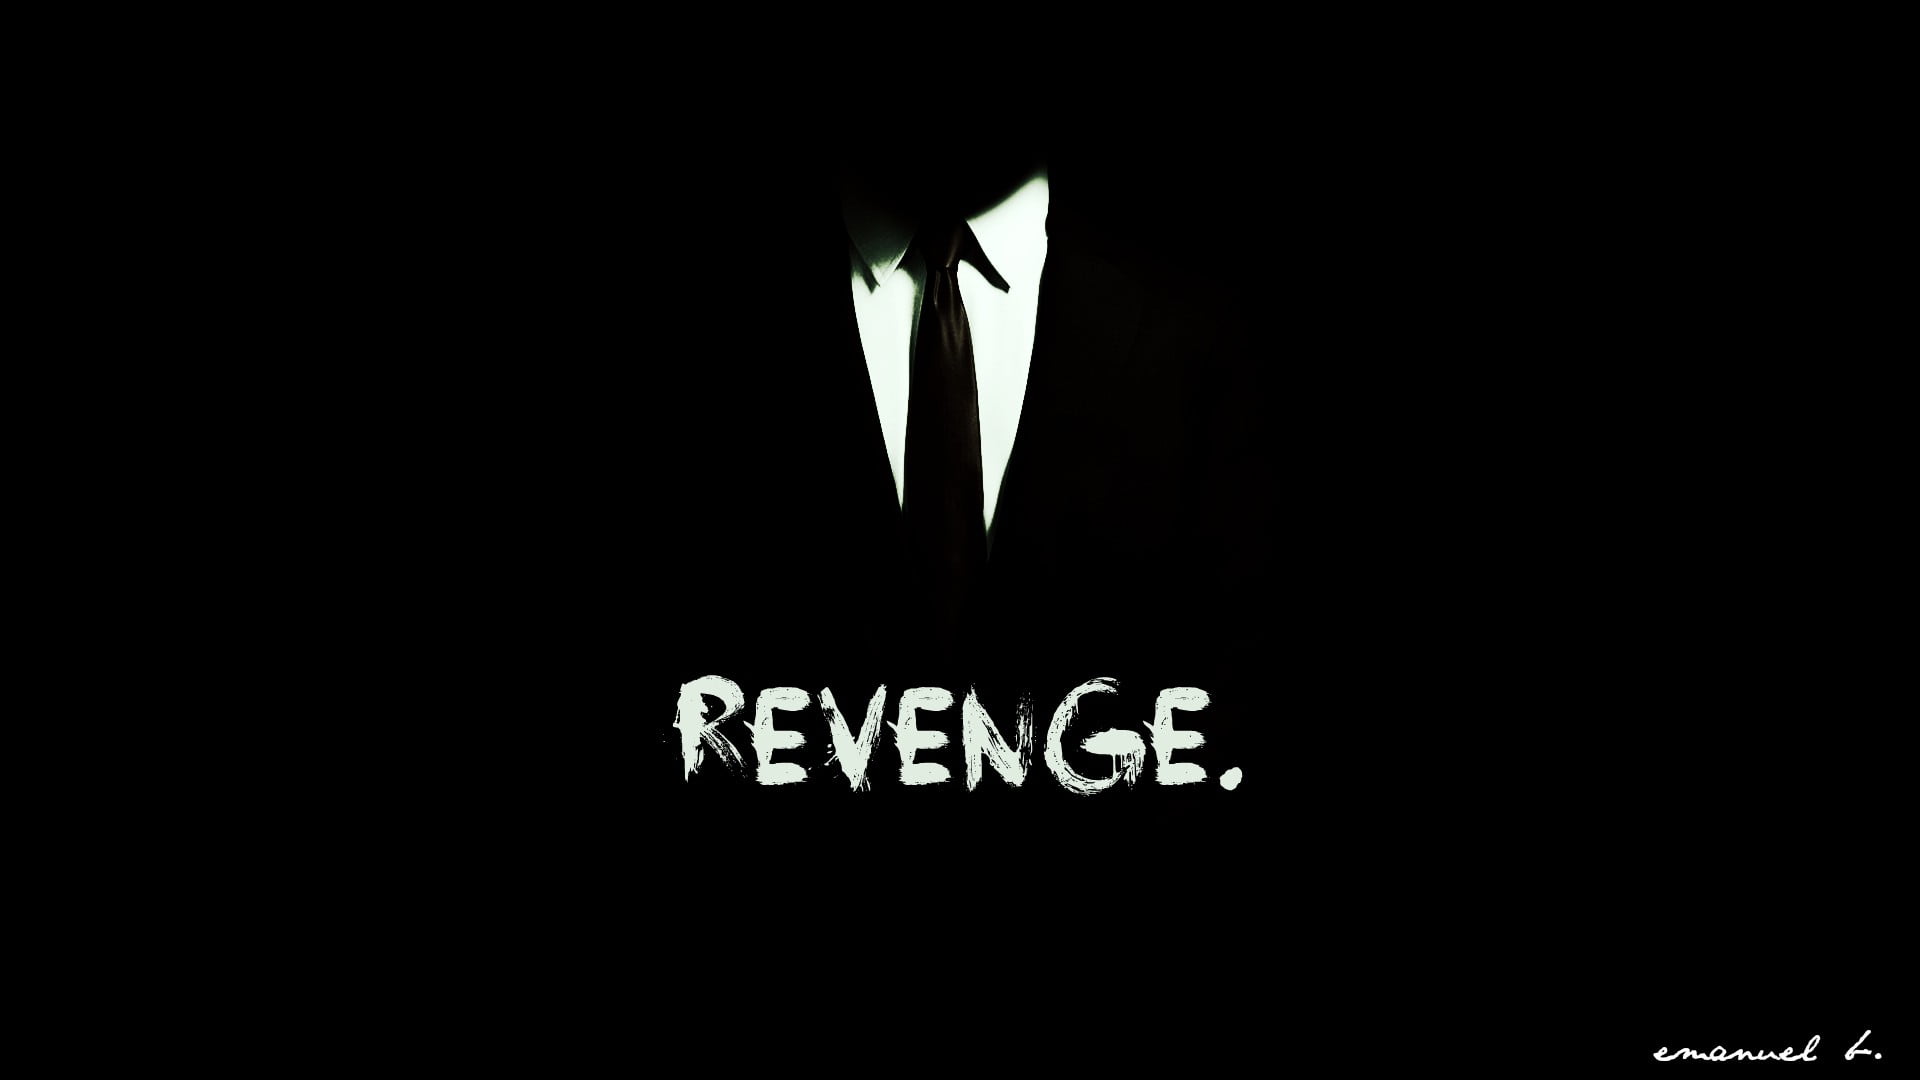 Revenge digital wallpaper, quote, Emanuelb, tie, digital art